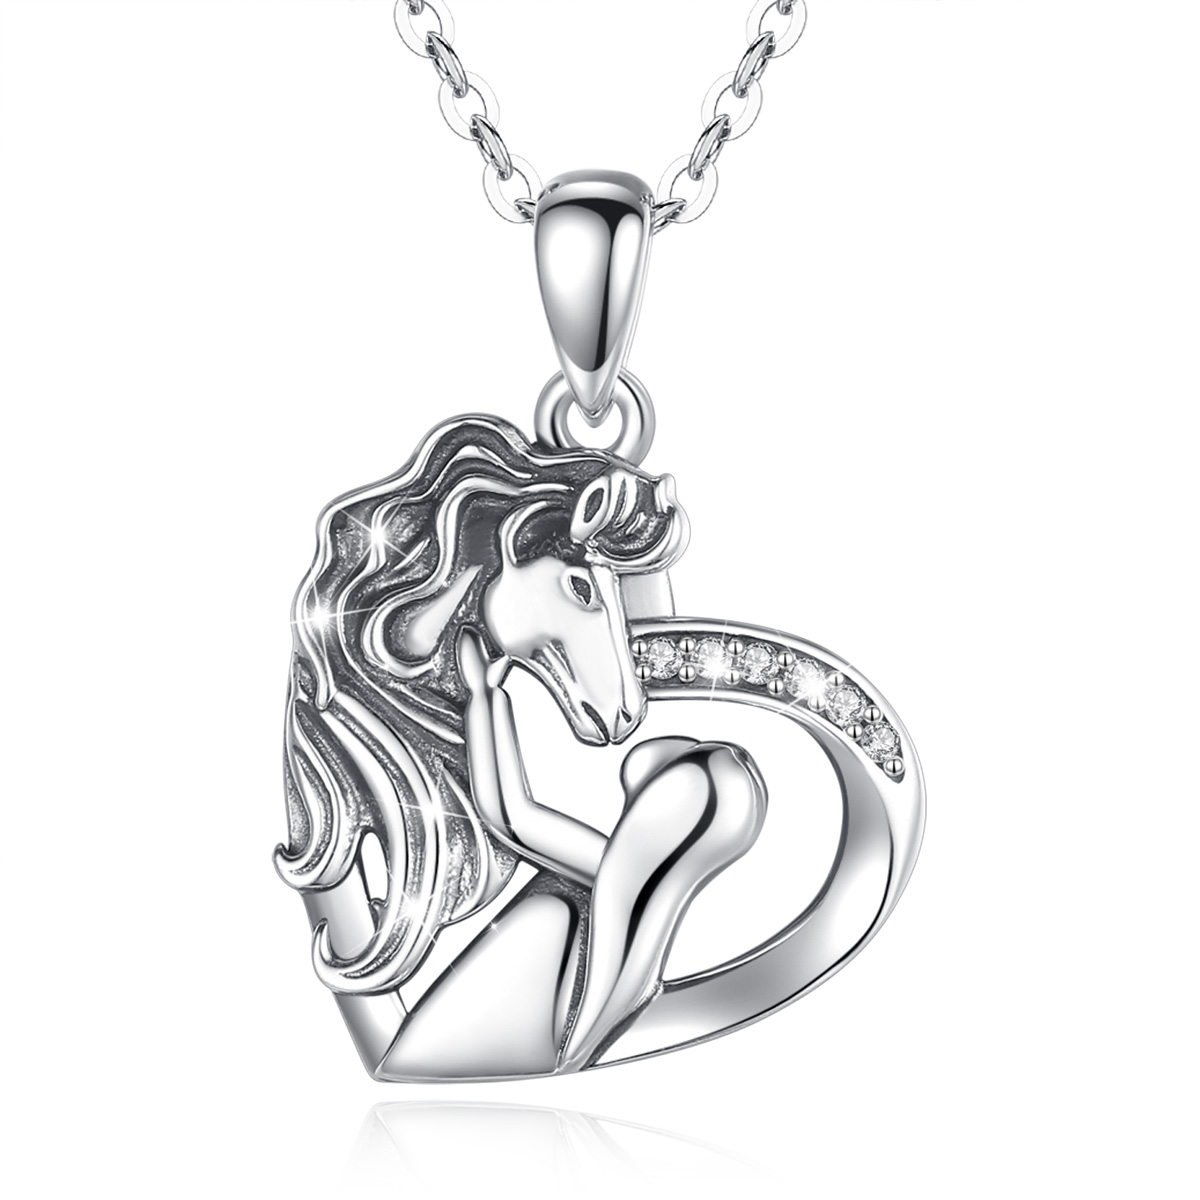 S925 Sterling Silver Vintage Oxidized Add CZ Diamond Unique Heart Shape Girls Unicorn Charms Necklace